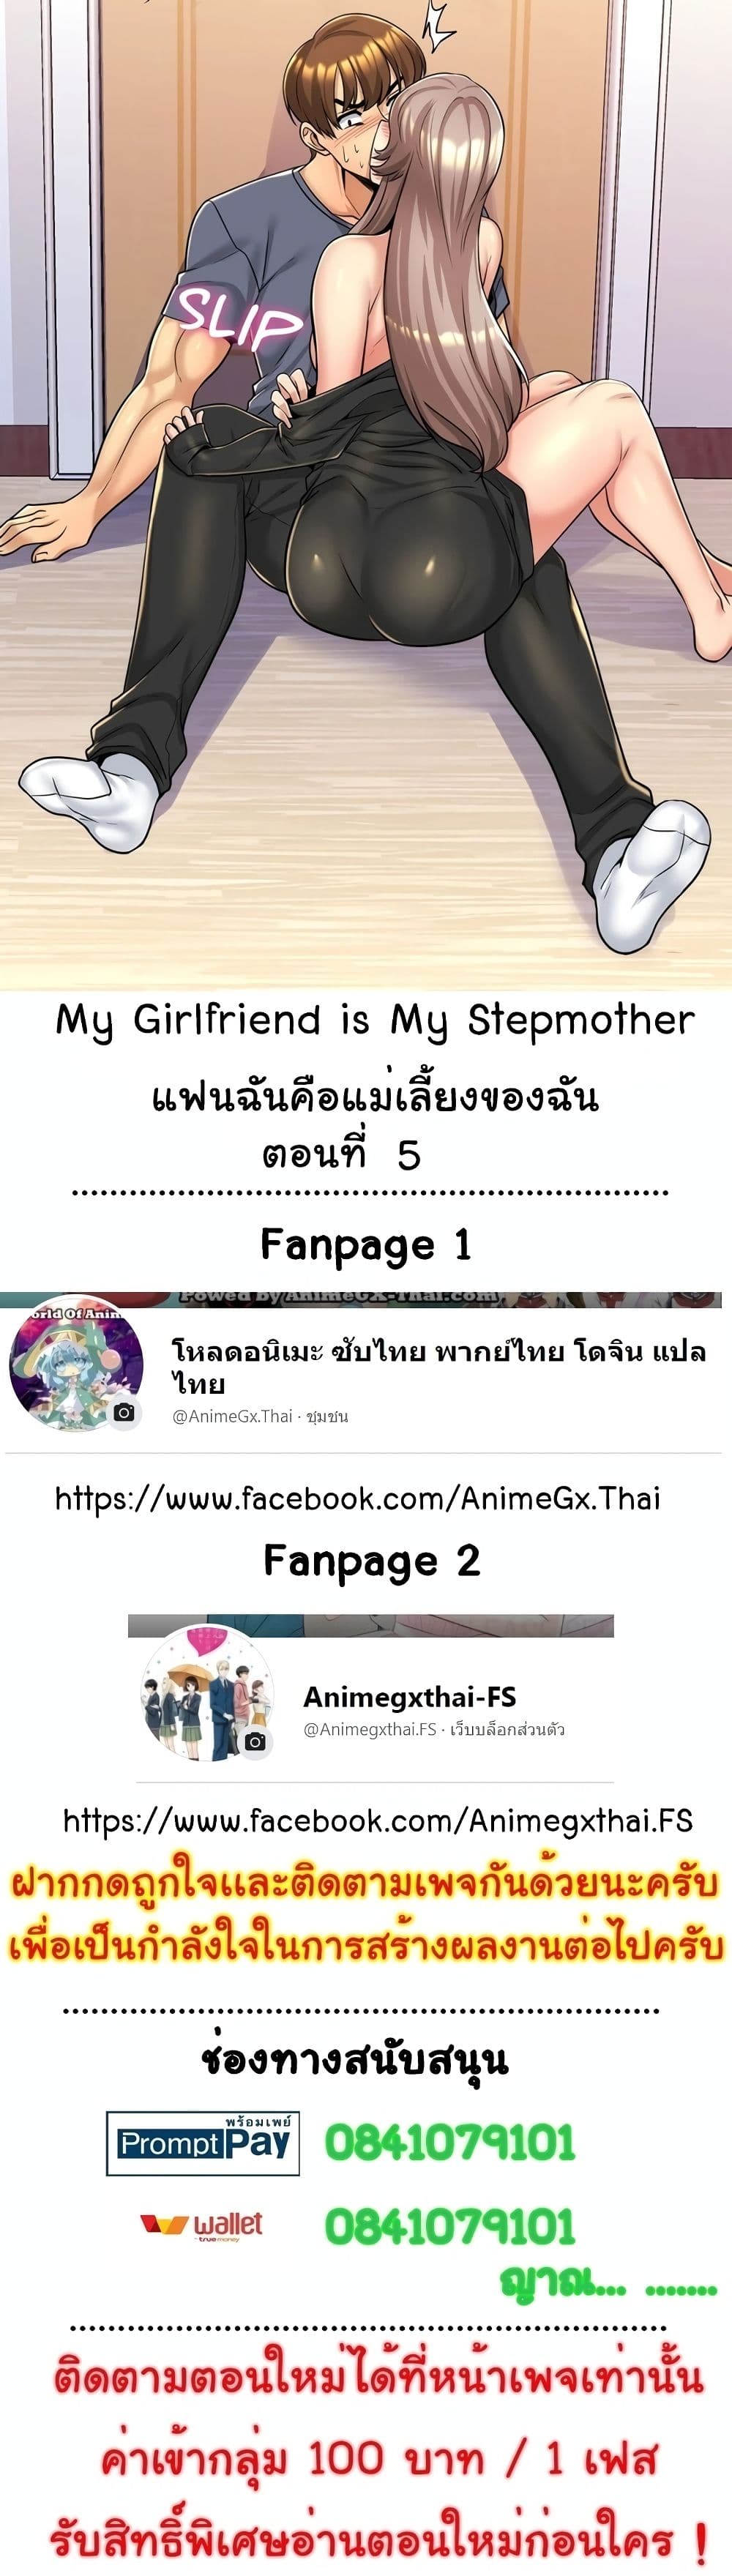 My Girlfriend is My Stepmother 5-5